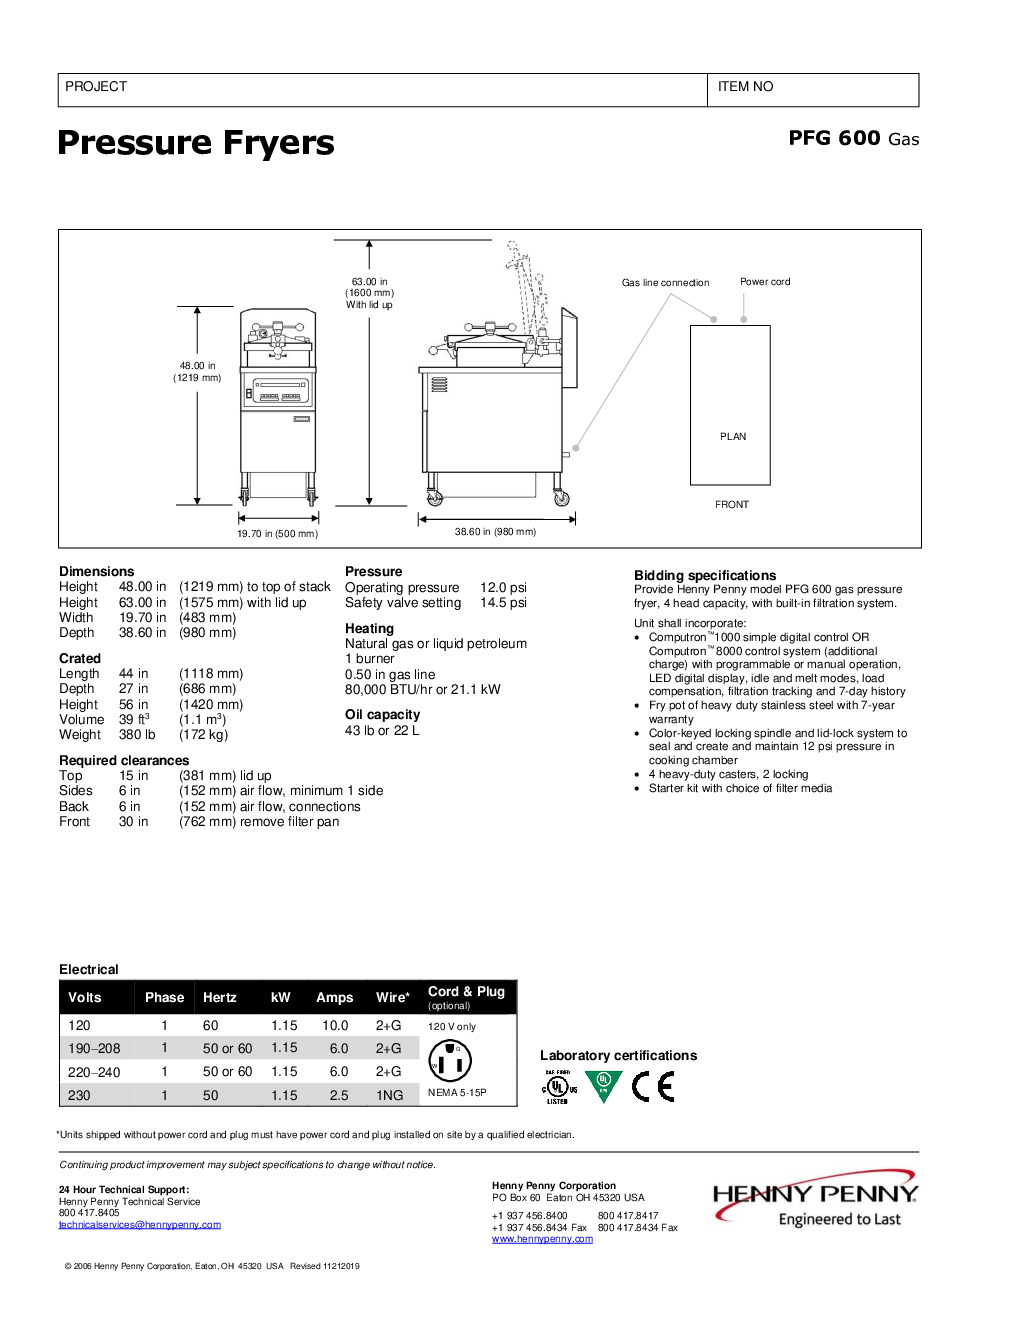 Henny Penny PFG600.18 Gas Pressure Fryer w/ 43-lb Oil Capacity, Rectangular Frypot, 12 PSI